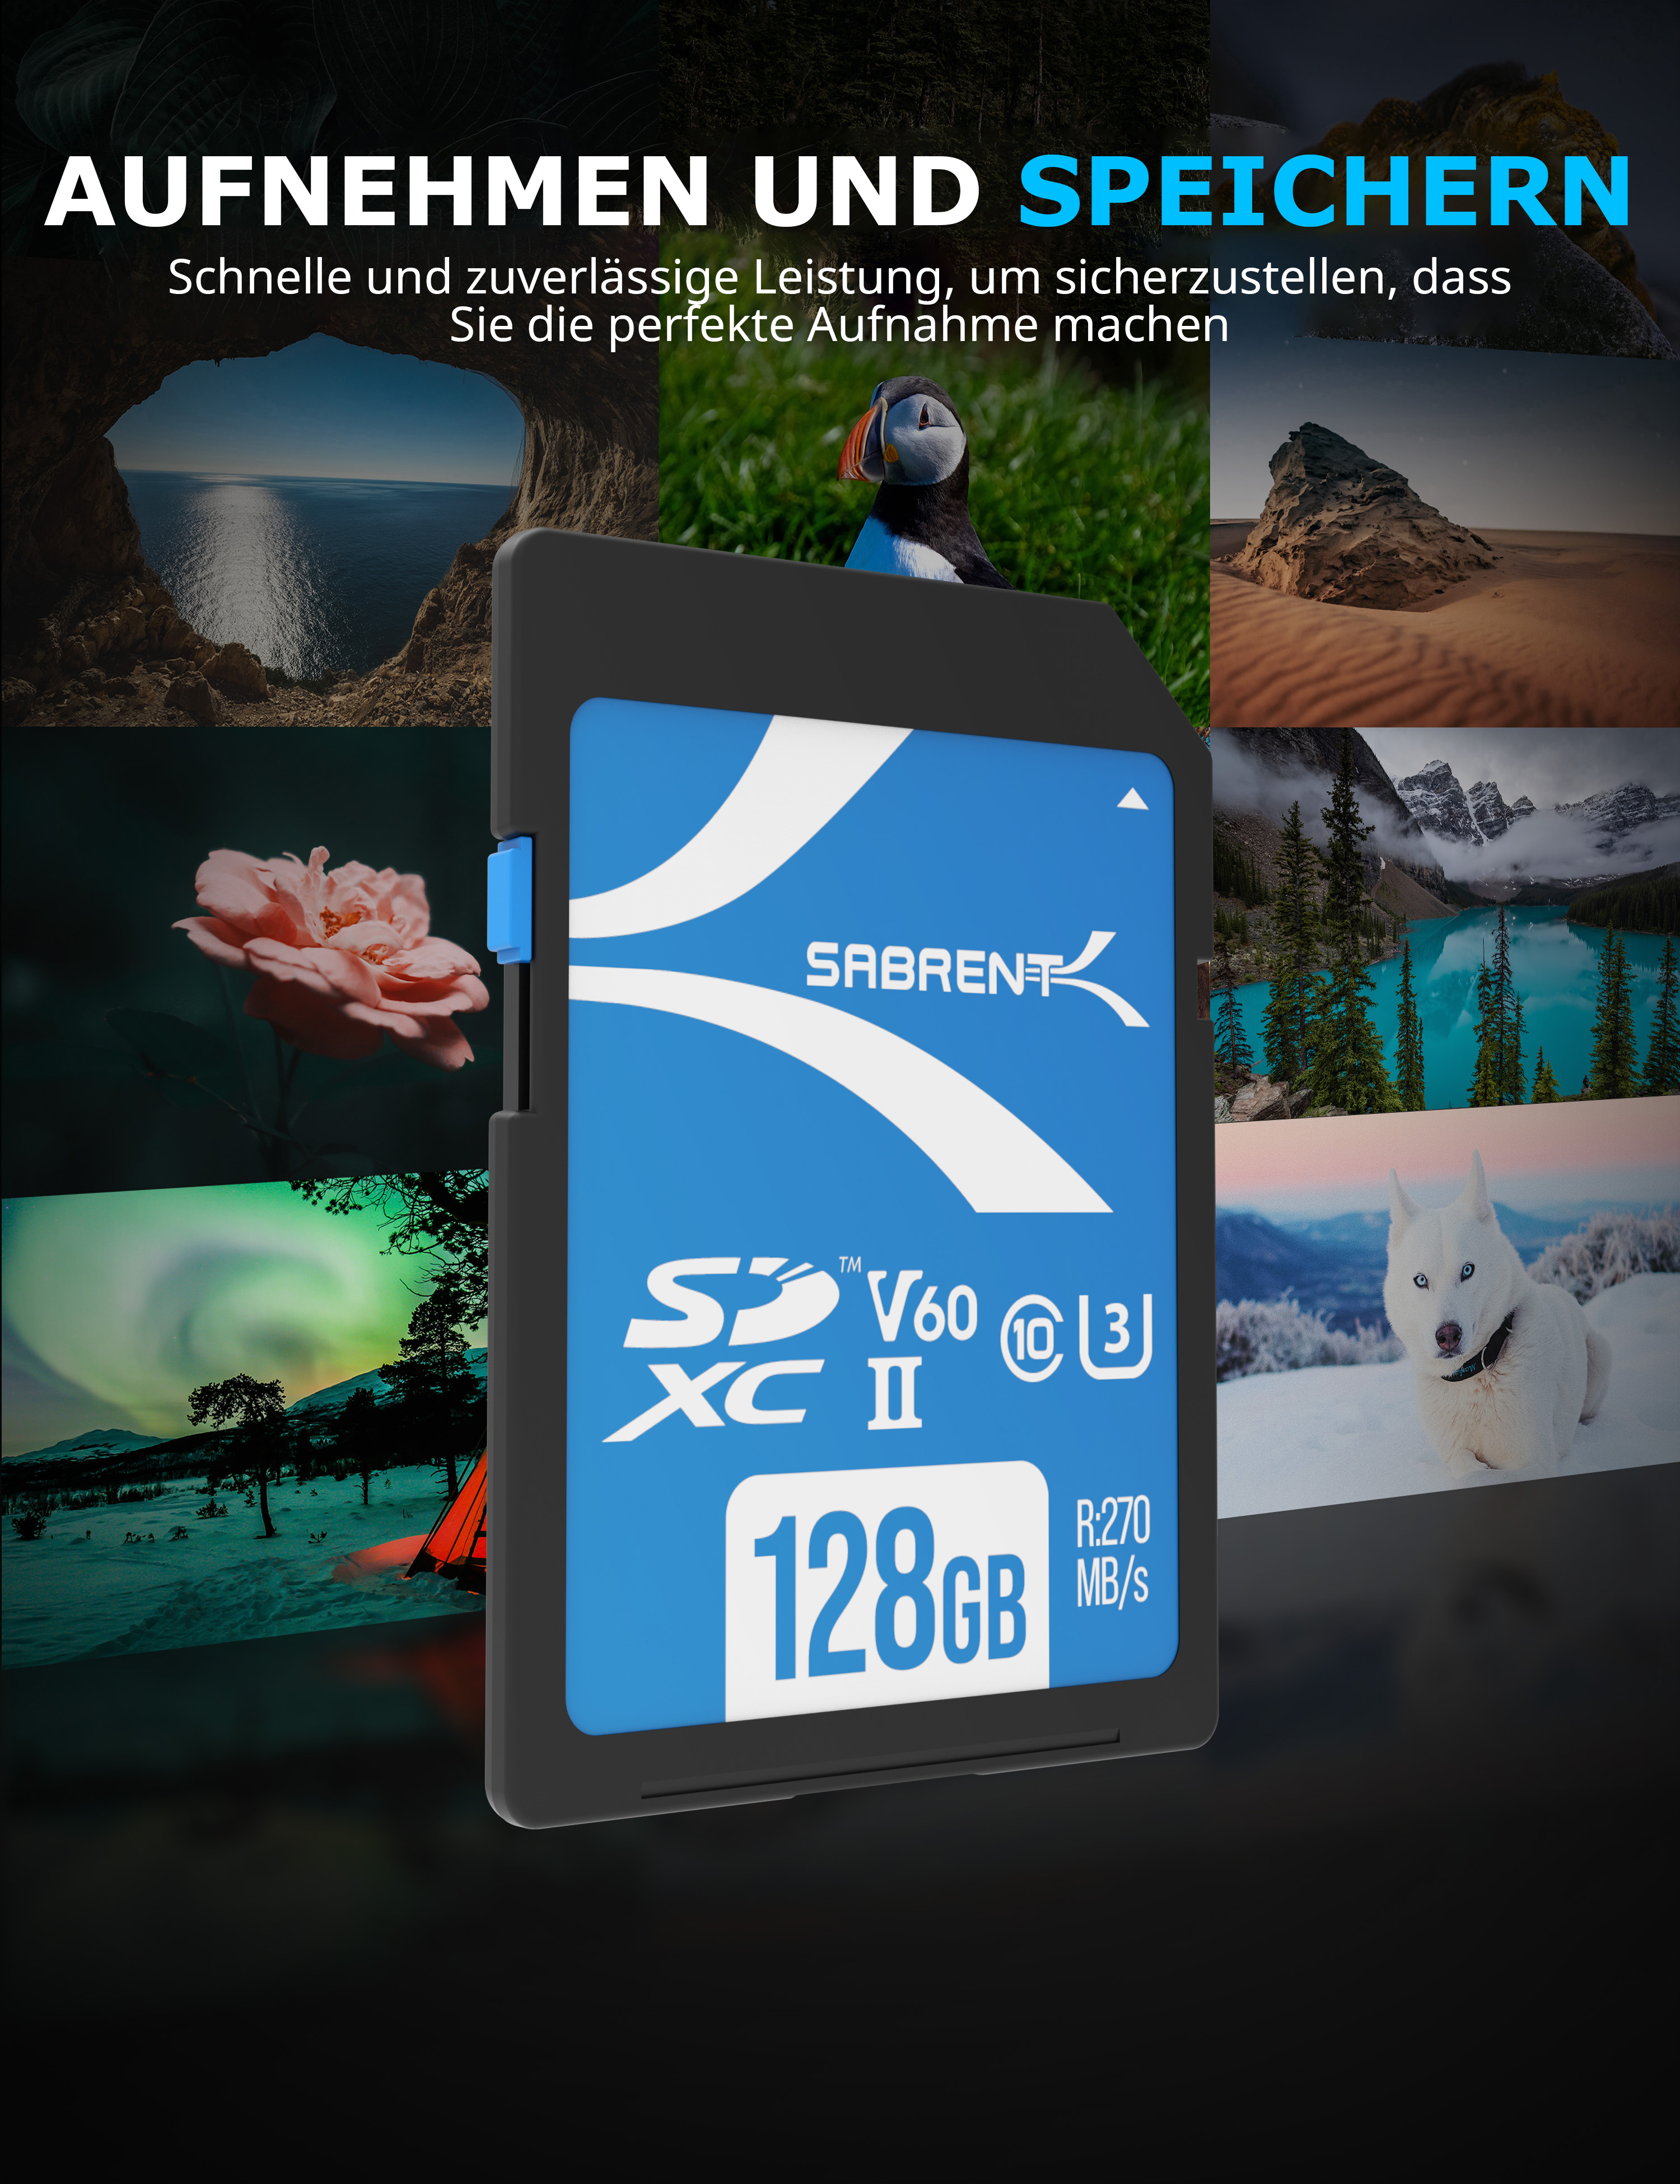 SD SABRENT V60 SDXC 270 SD GB, Karte, 128GB 128 MB/s UHS-II,